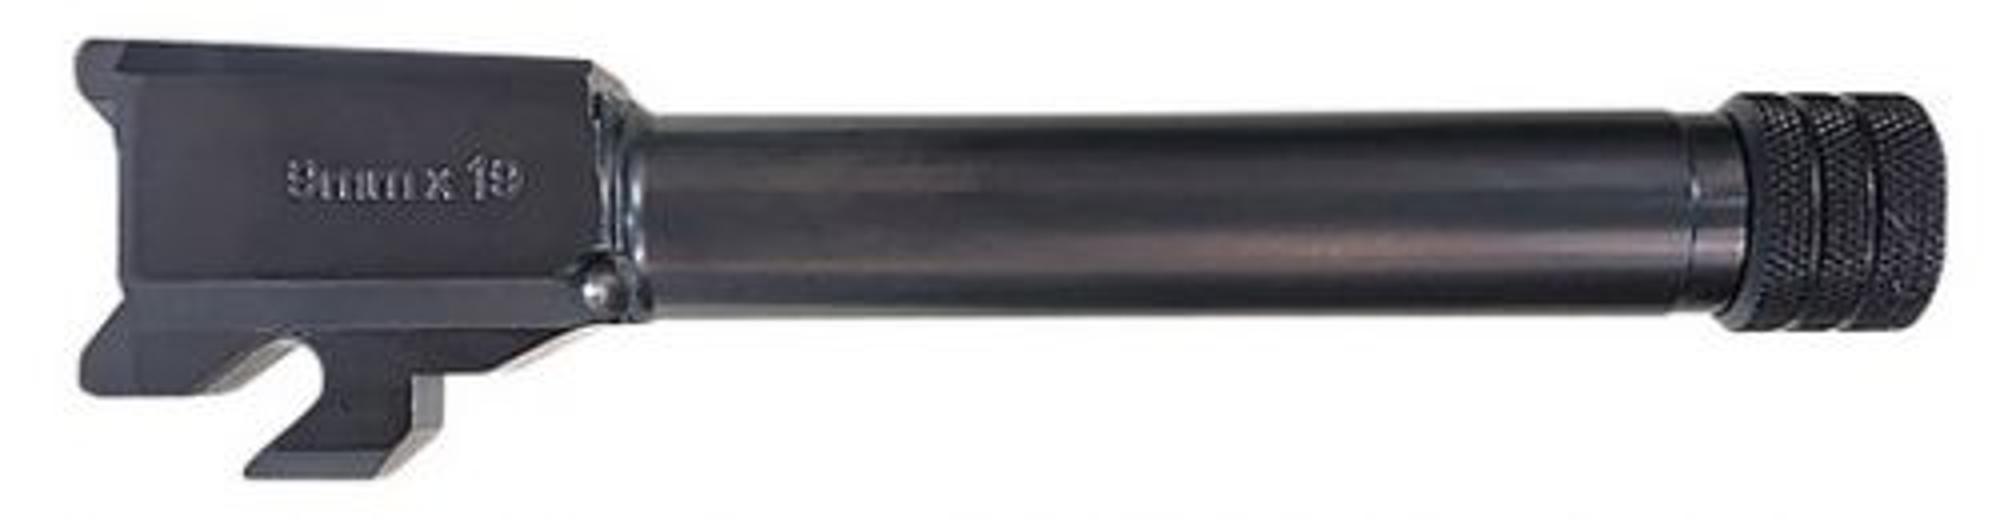  Barrel P320 9mm 5.5 ` Cip Threaded